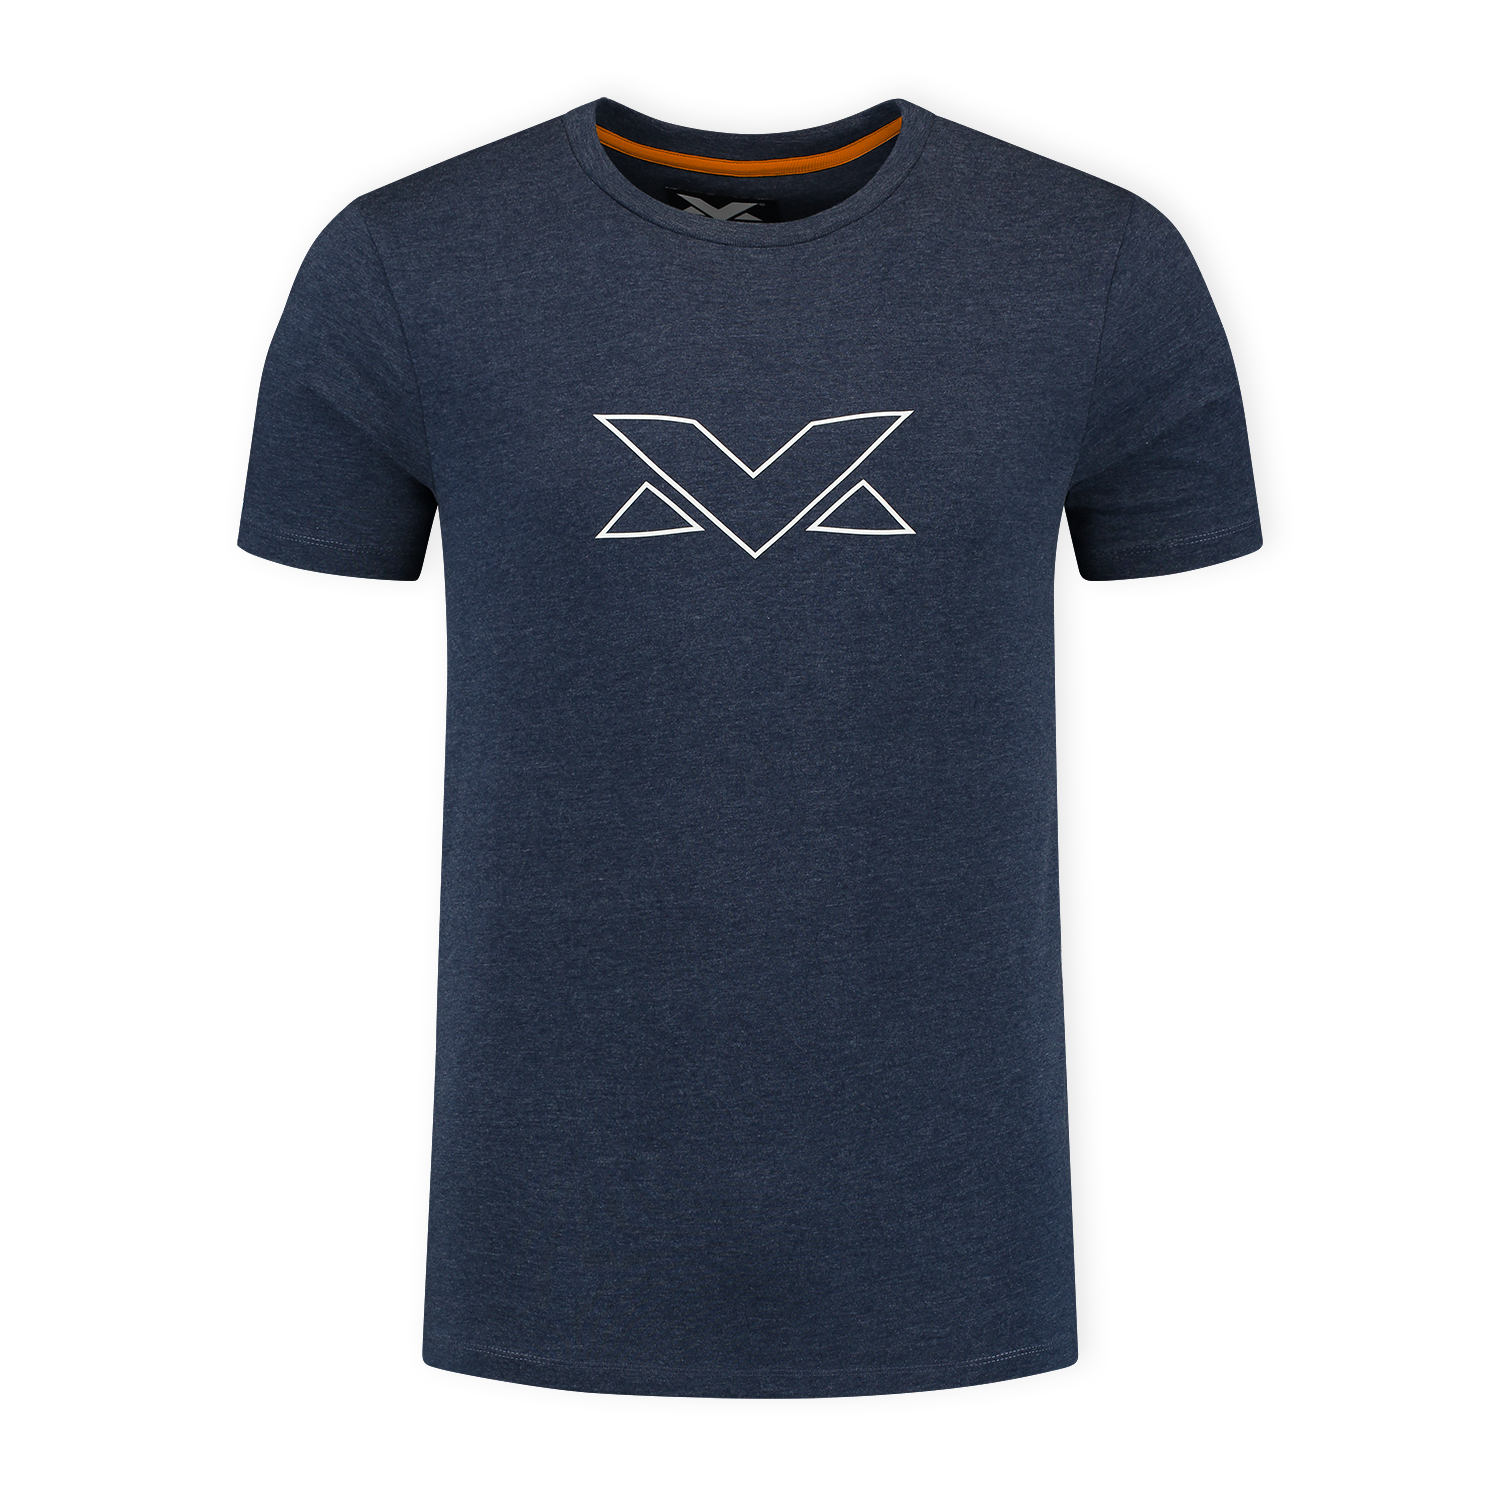 MV Logo T-shirt - Donkerblauw - XXXL - Max Verstappen